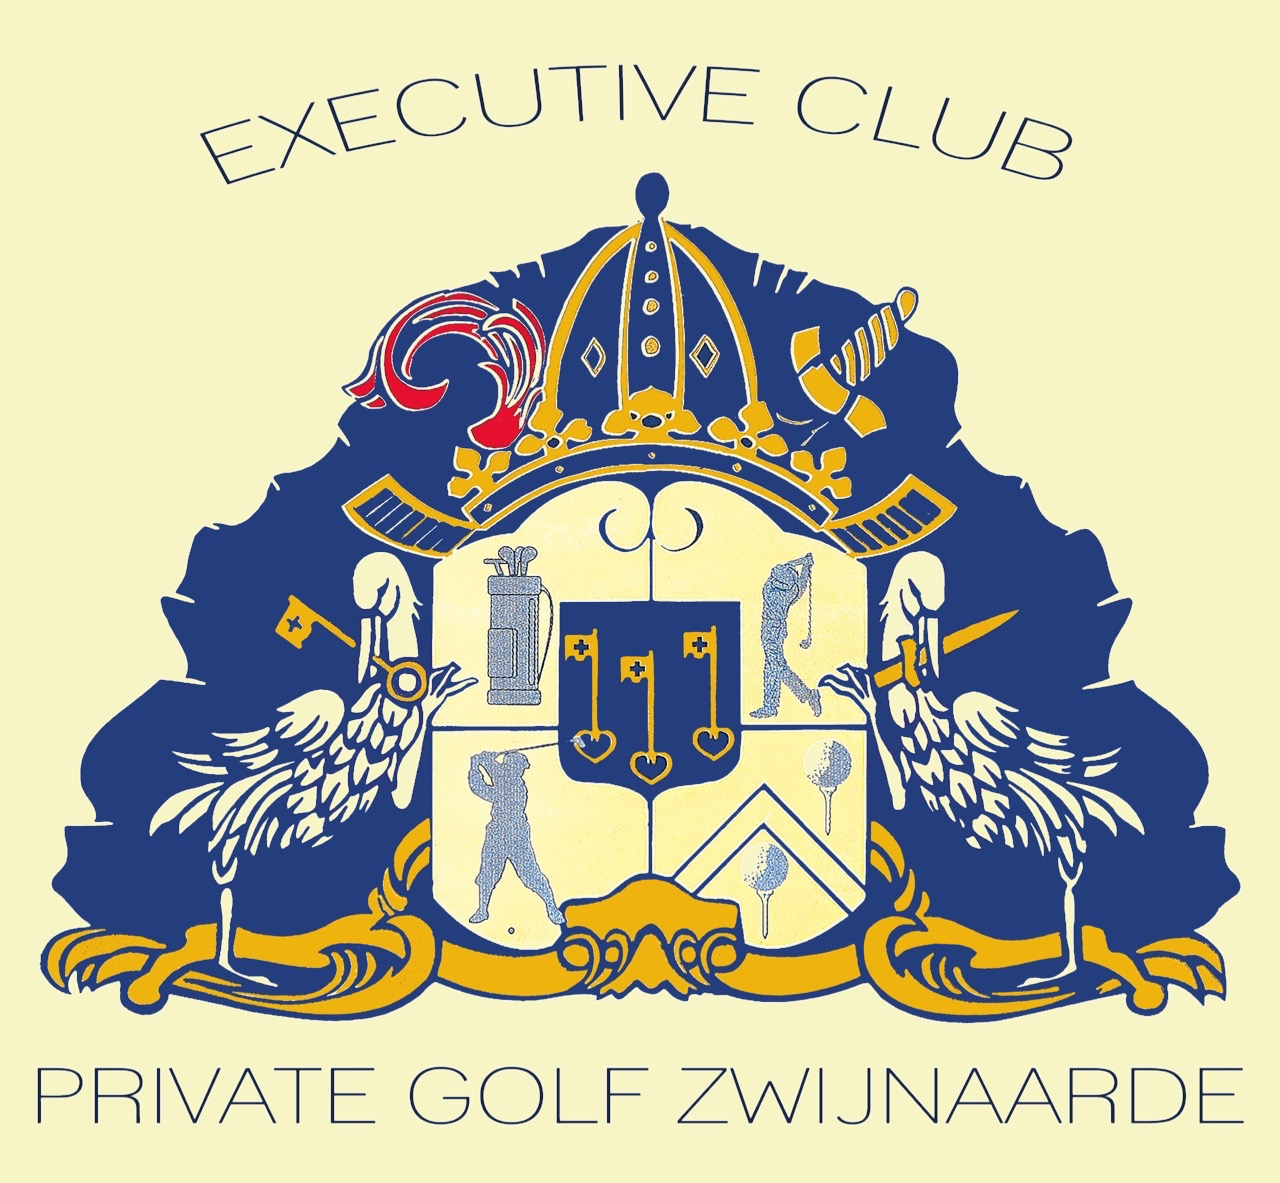 Executive Club Private Golf Zwijnaarde